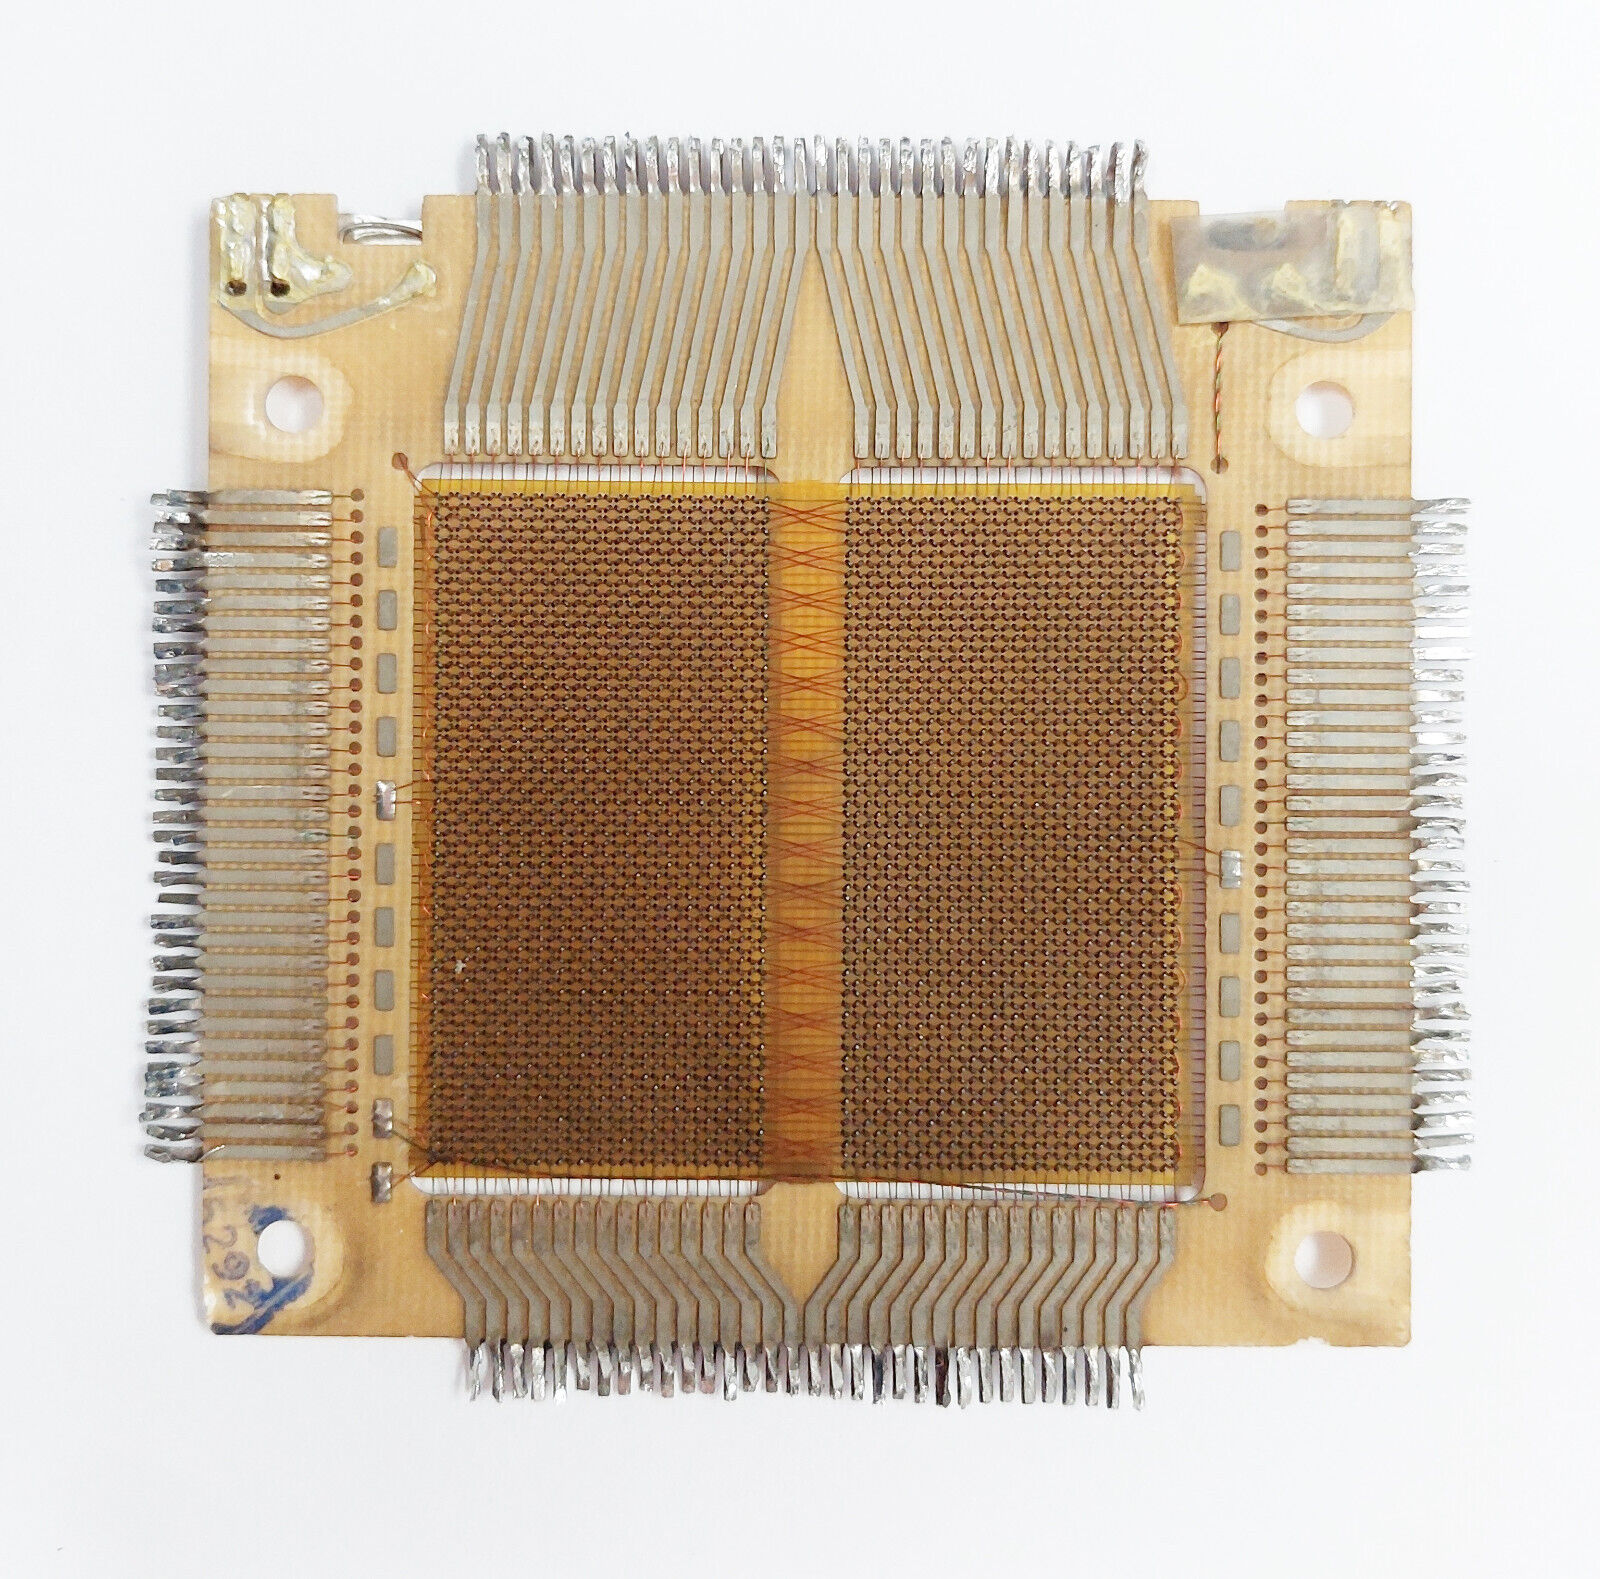 USA Sperry Rand  UNIVAC Ferrite Magnetic Core Memory Plate 1960s